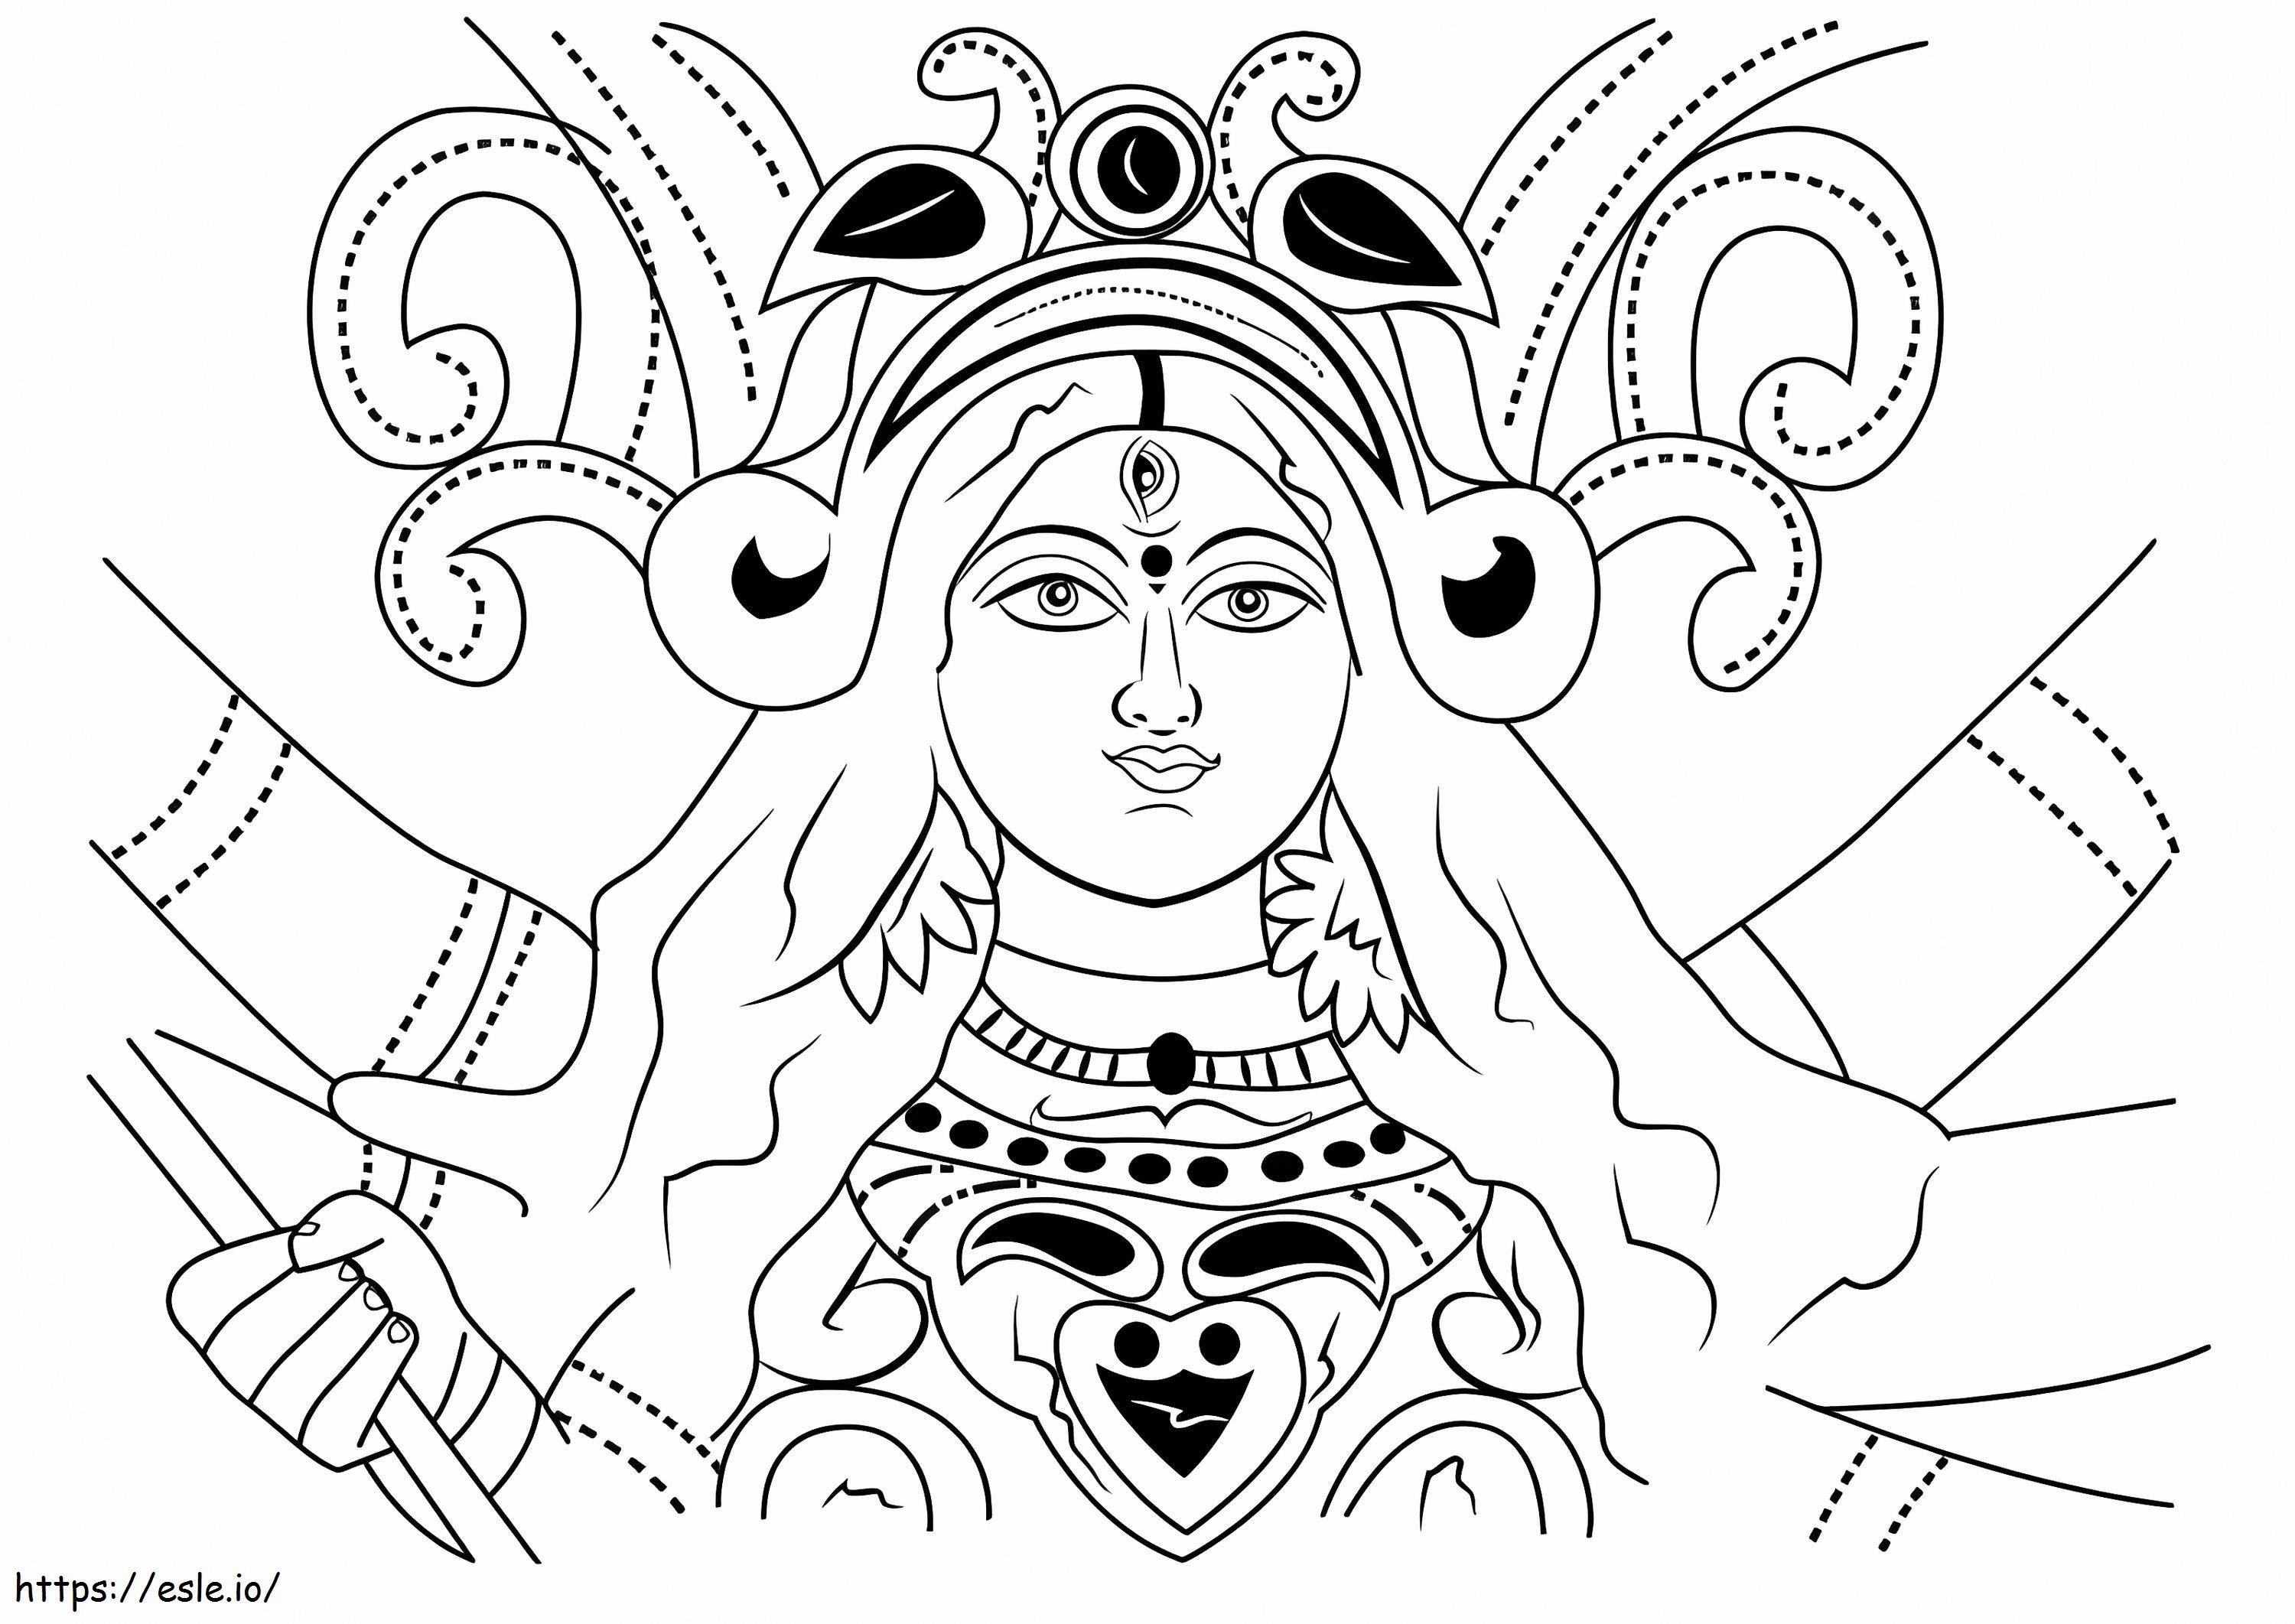 Durga Devi Face coloring page